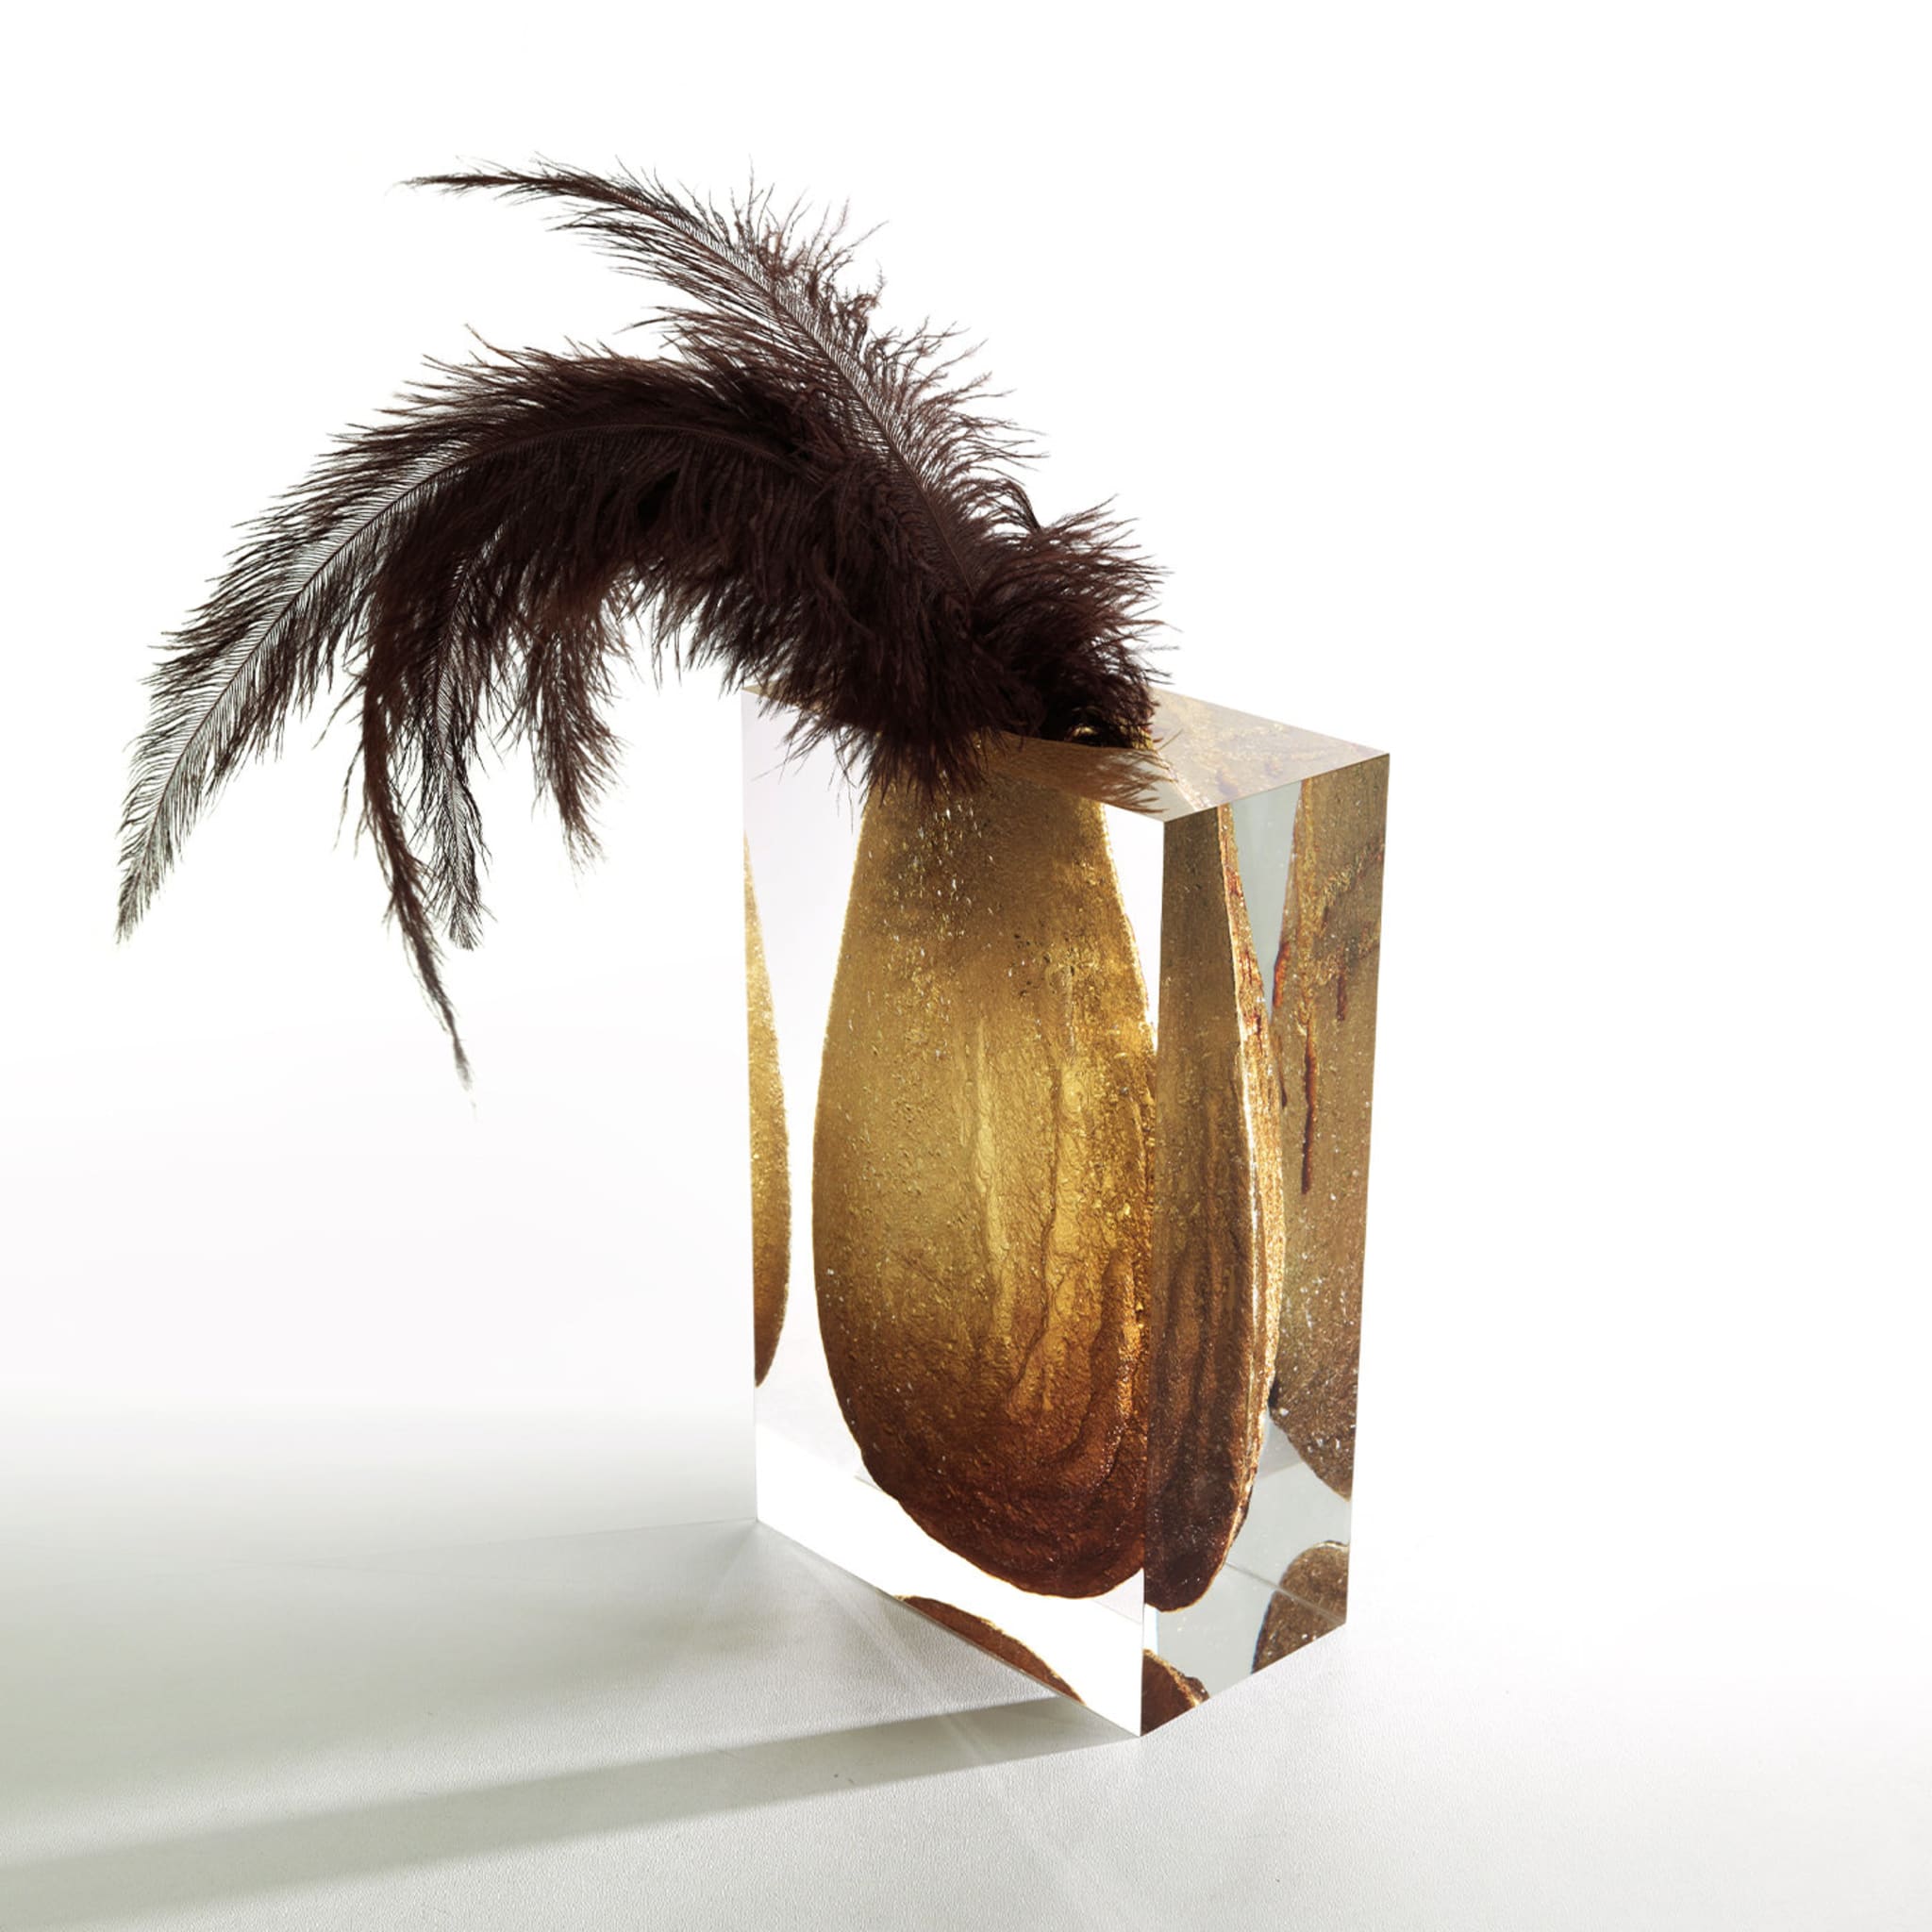 Glacoja Ochre Vase by Analogia Project - Alternative view 3